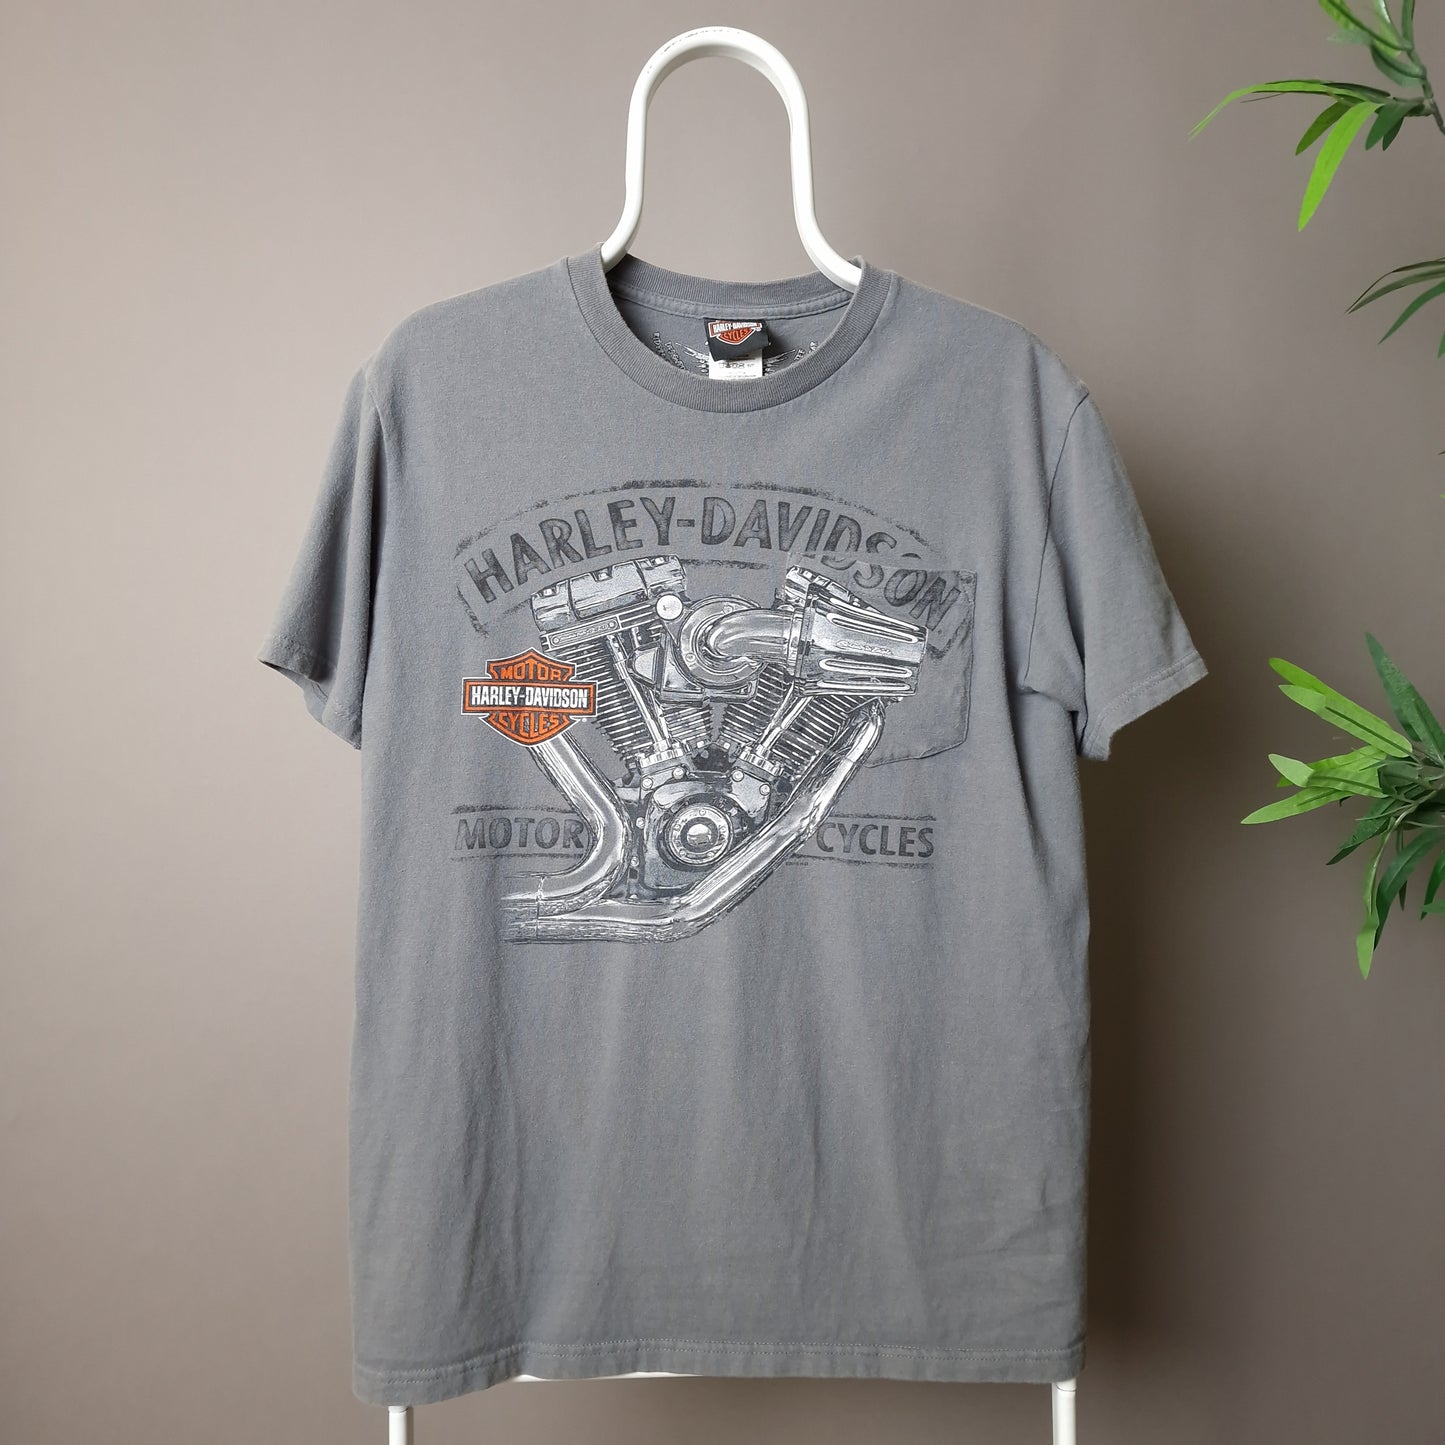 Vintage Harley Davidson t-shirt in grey - small